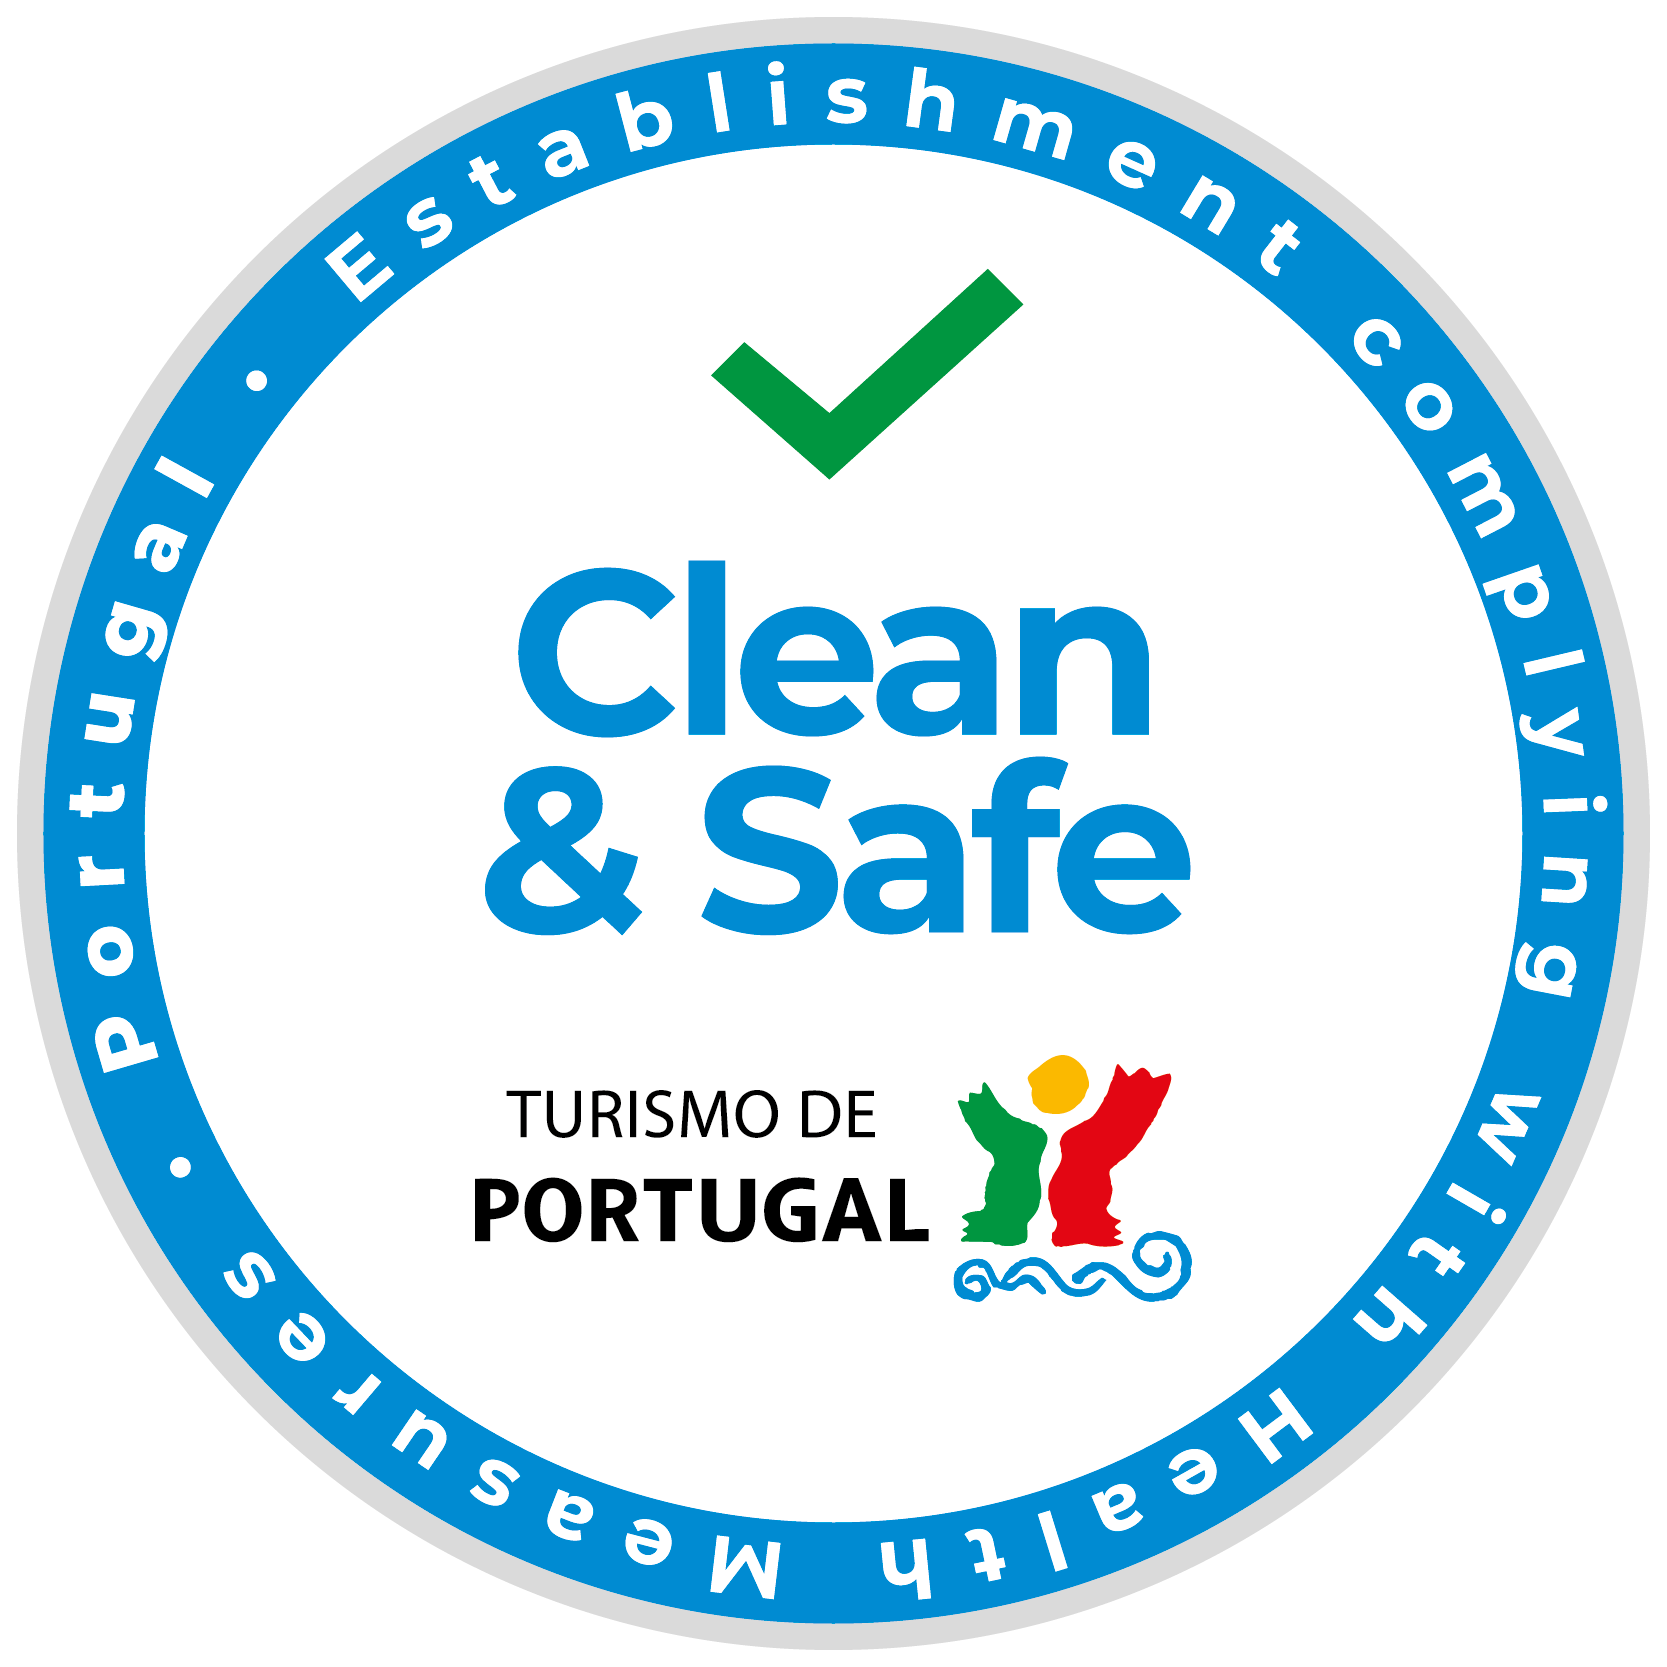 European Tourism Covid-19 Safety Seal